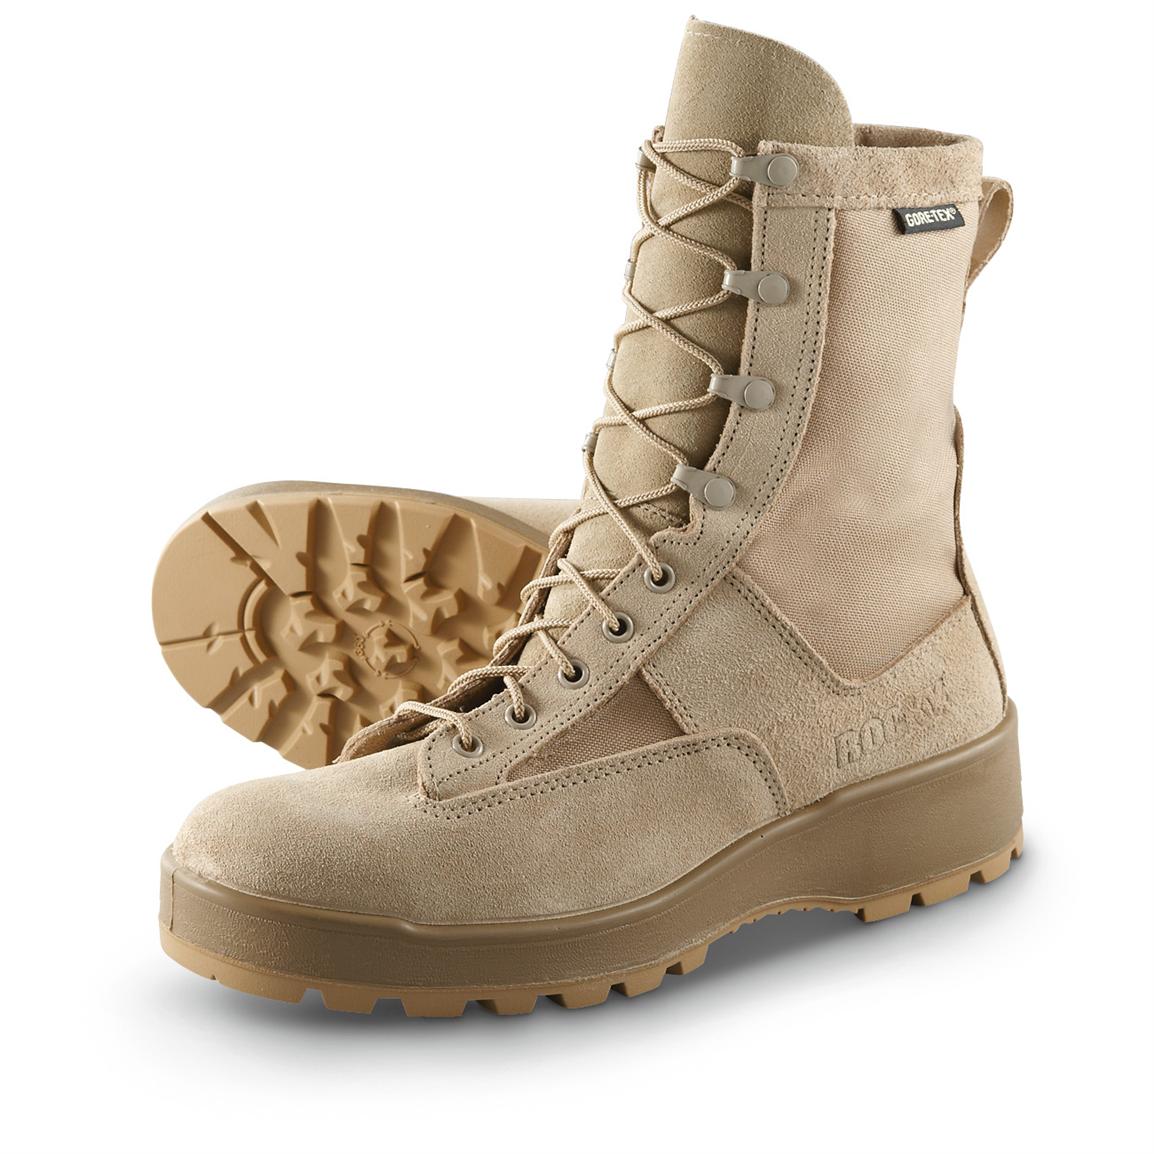 Men's Rocky® Basics Duty Boots, Sand - 292268, Combat & Tactical ...